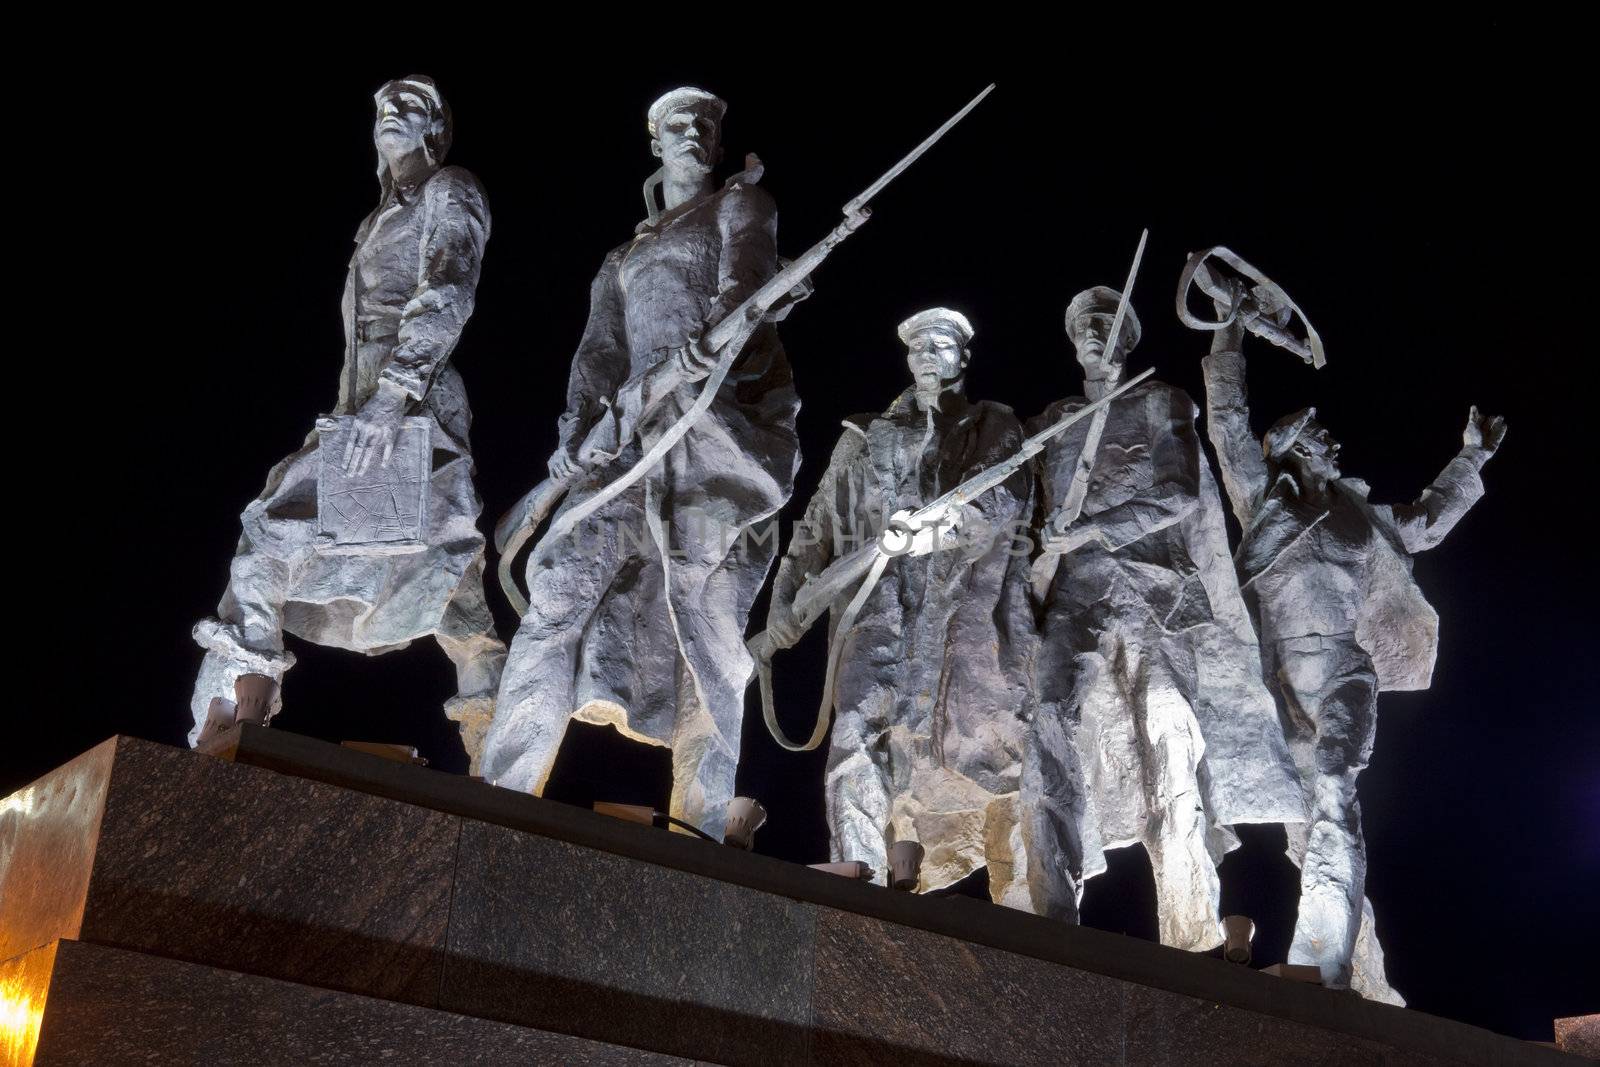 Monument to the Heroic Defenders of Leningrad in St Petersburg, Russia.